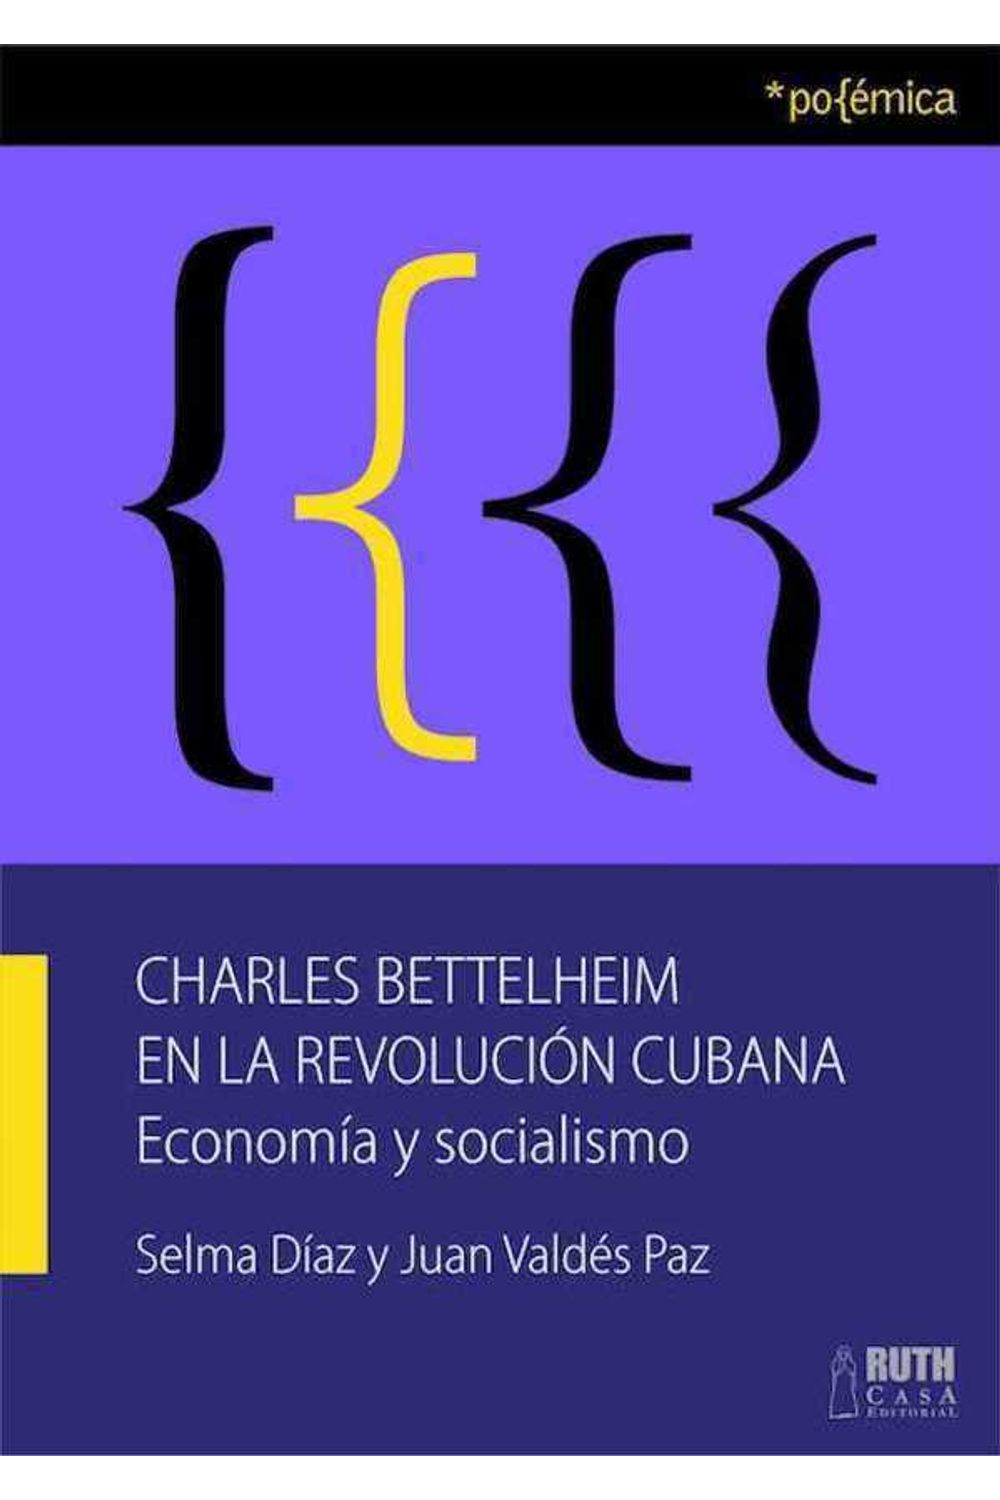 bw-charles-bettelheim-en-la-revolucioacuten-cubana-ruth-9789962697251